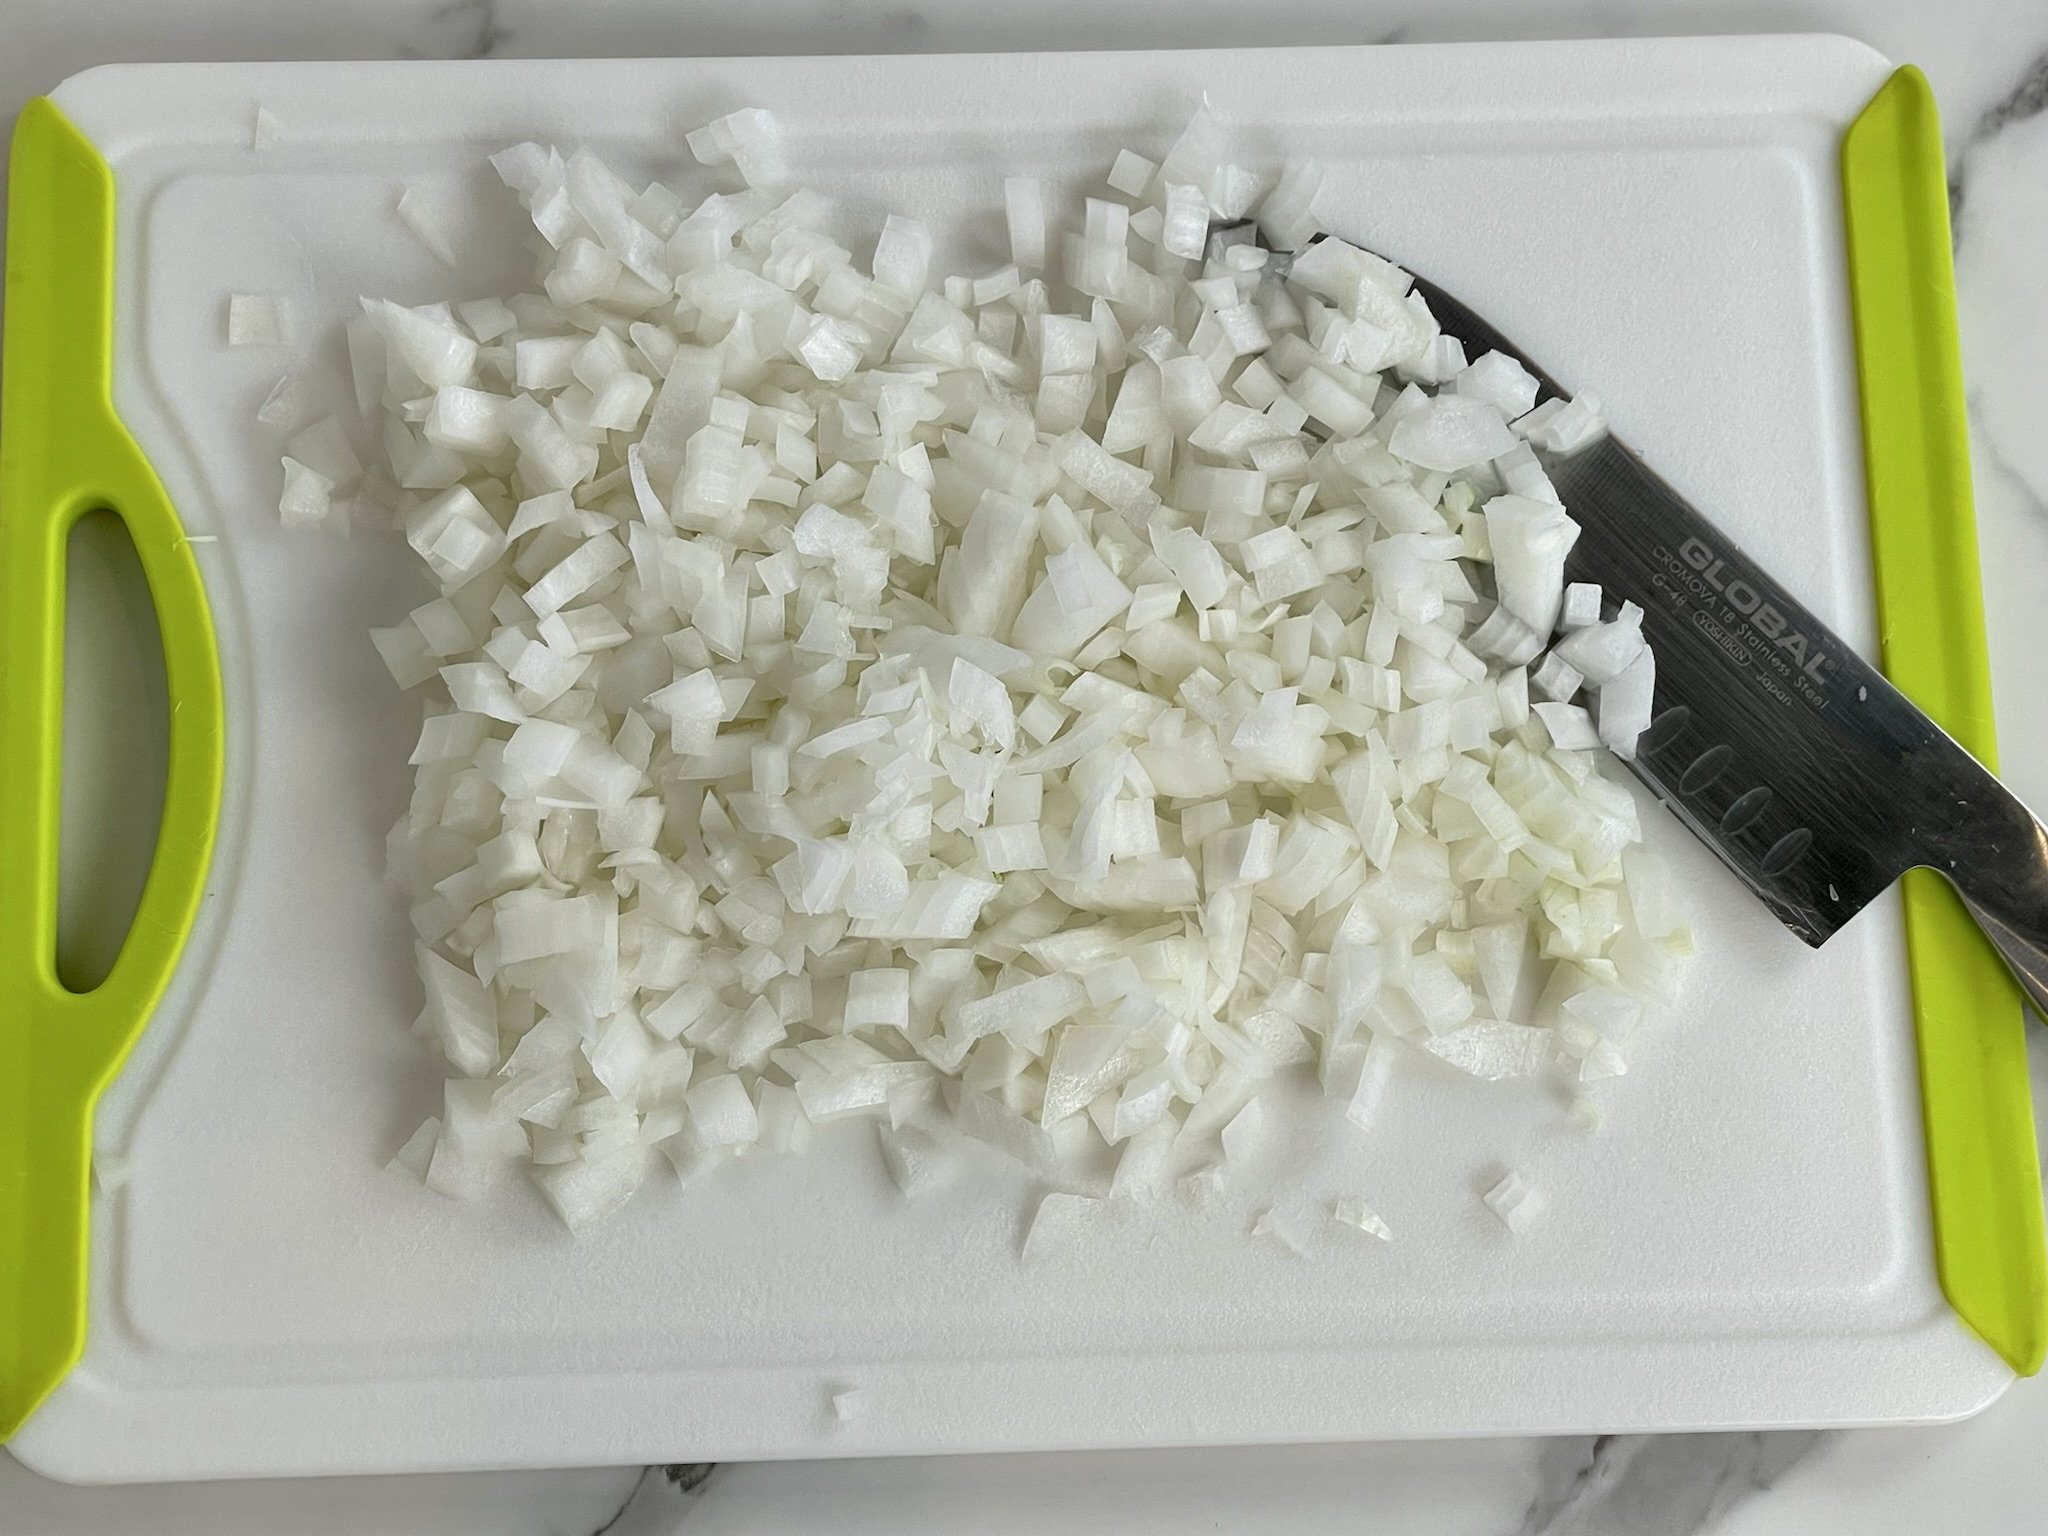 Diced white onion.